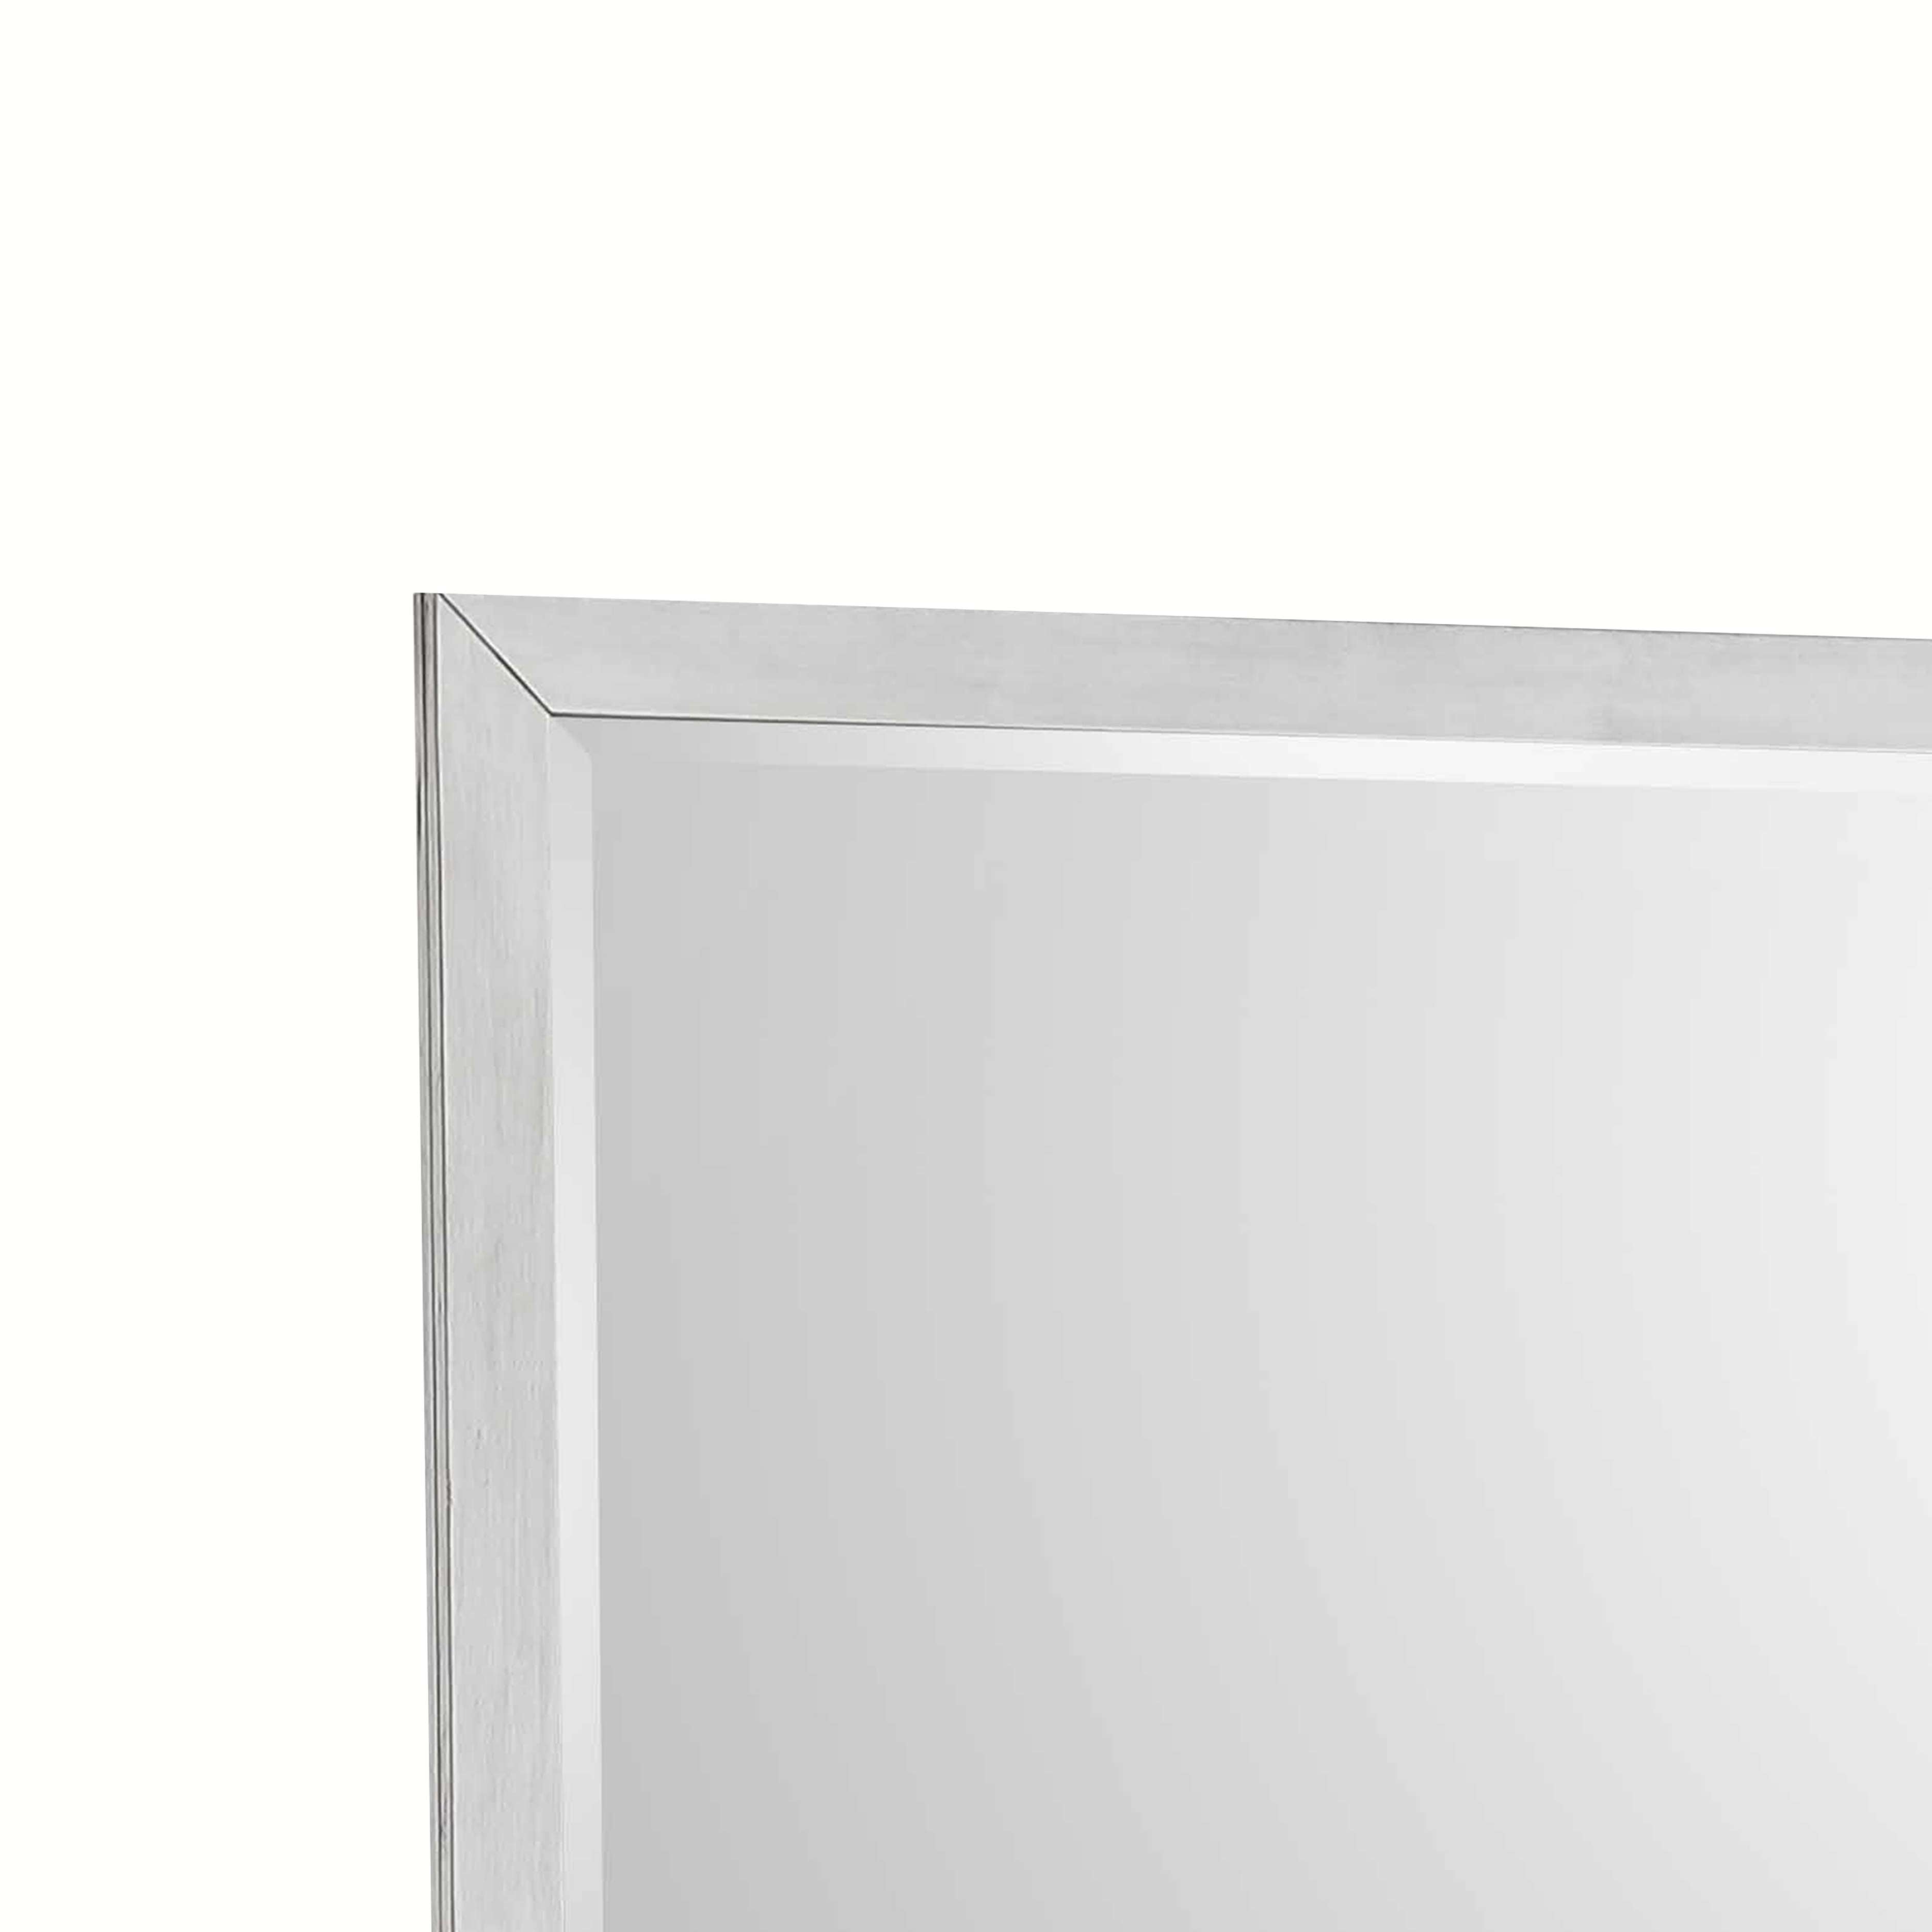 Benzara Rectangular Dresser Top Beveled Mirror With Wooden Frame, White And Silver By Benzara Mirrors BM215450